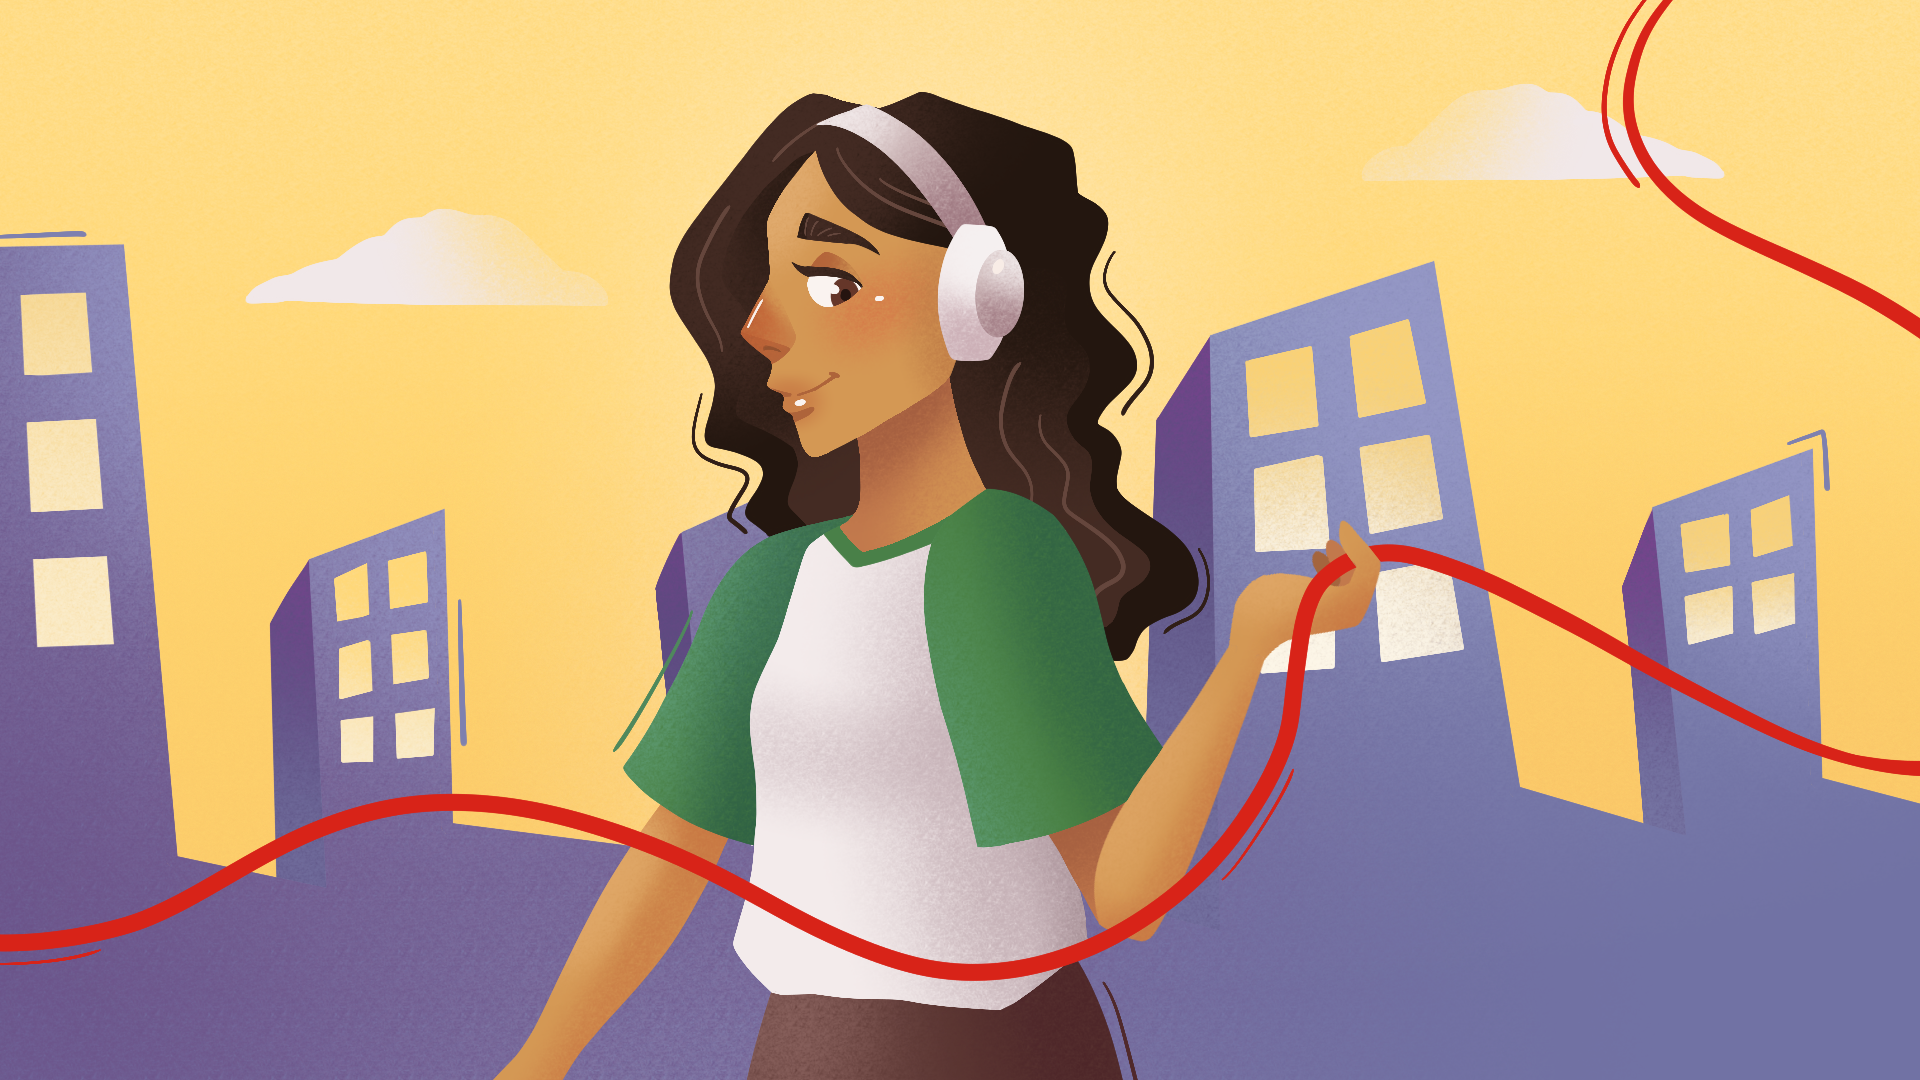 An animated woman wearing headphones.